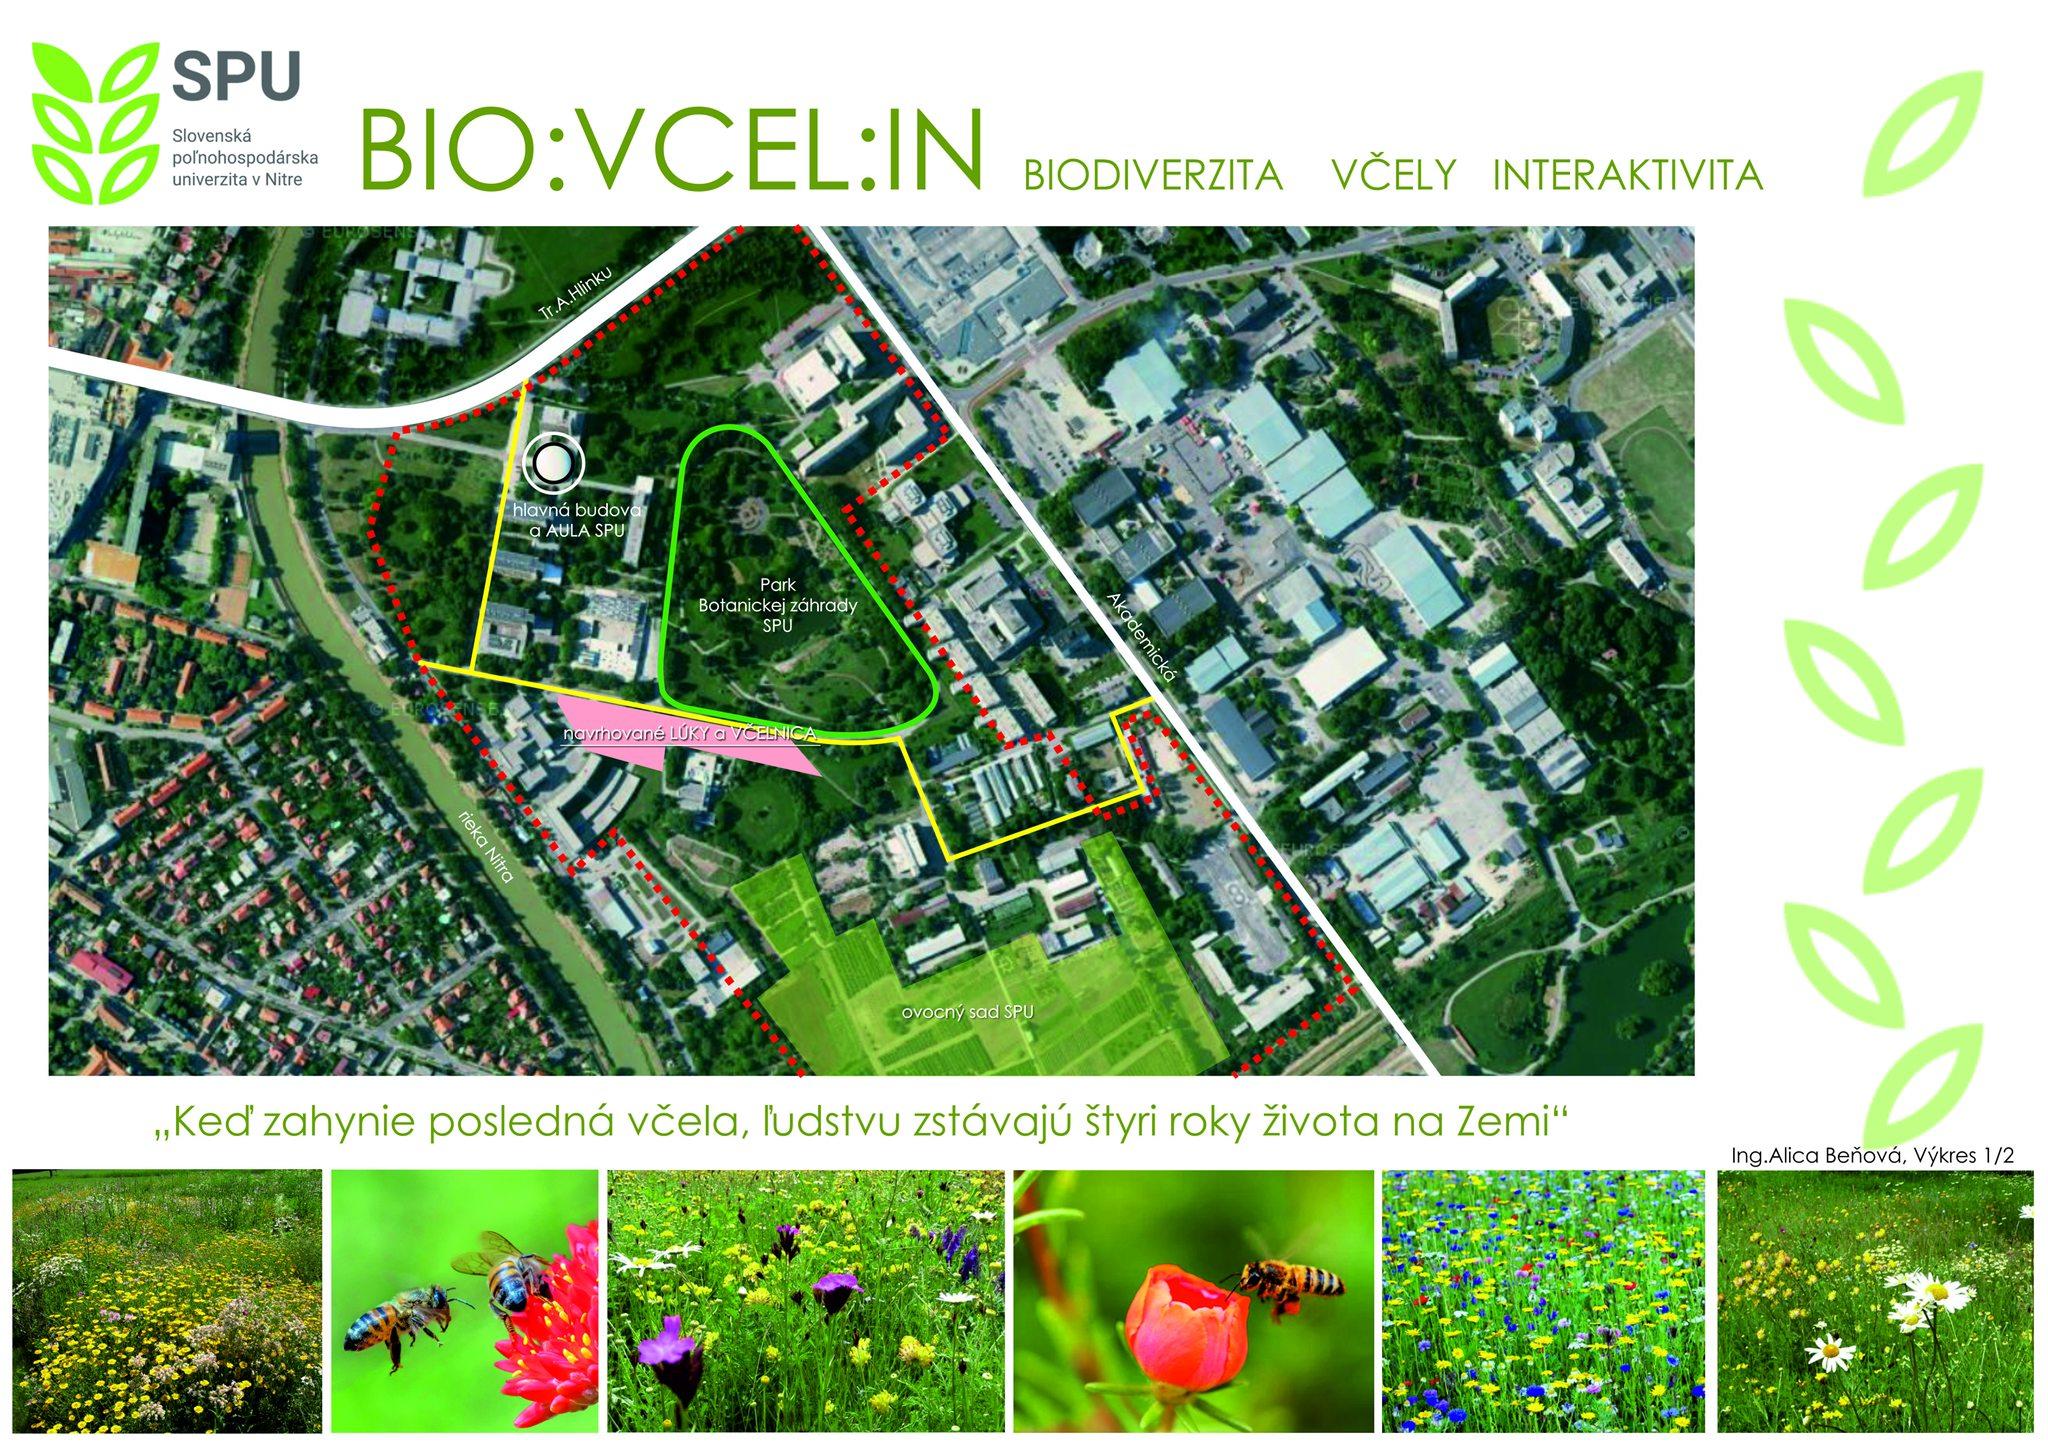 Projekt BIO:VCEL:IN v univerzitnom areále SPU Nitra